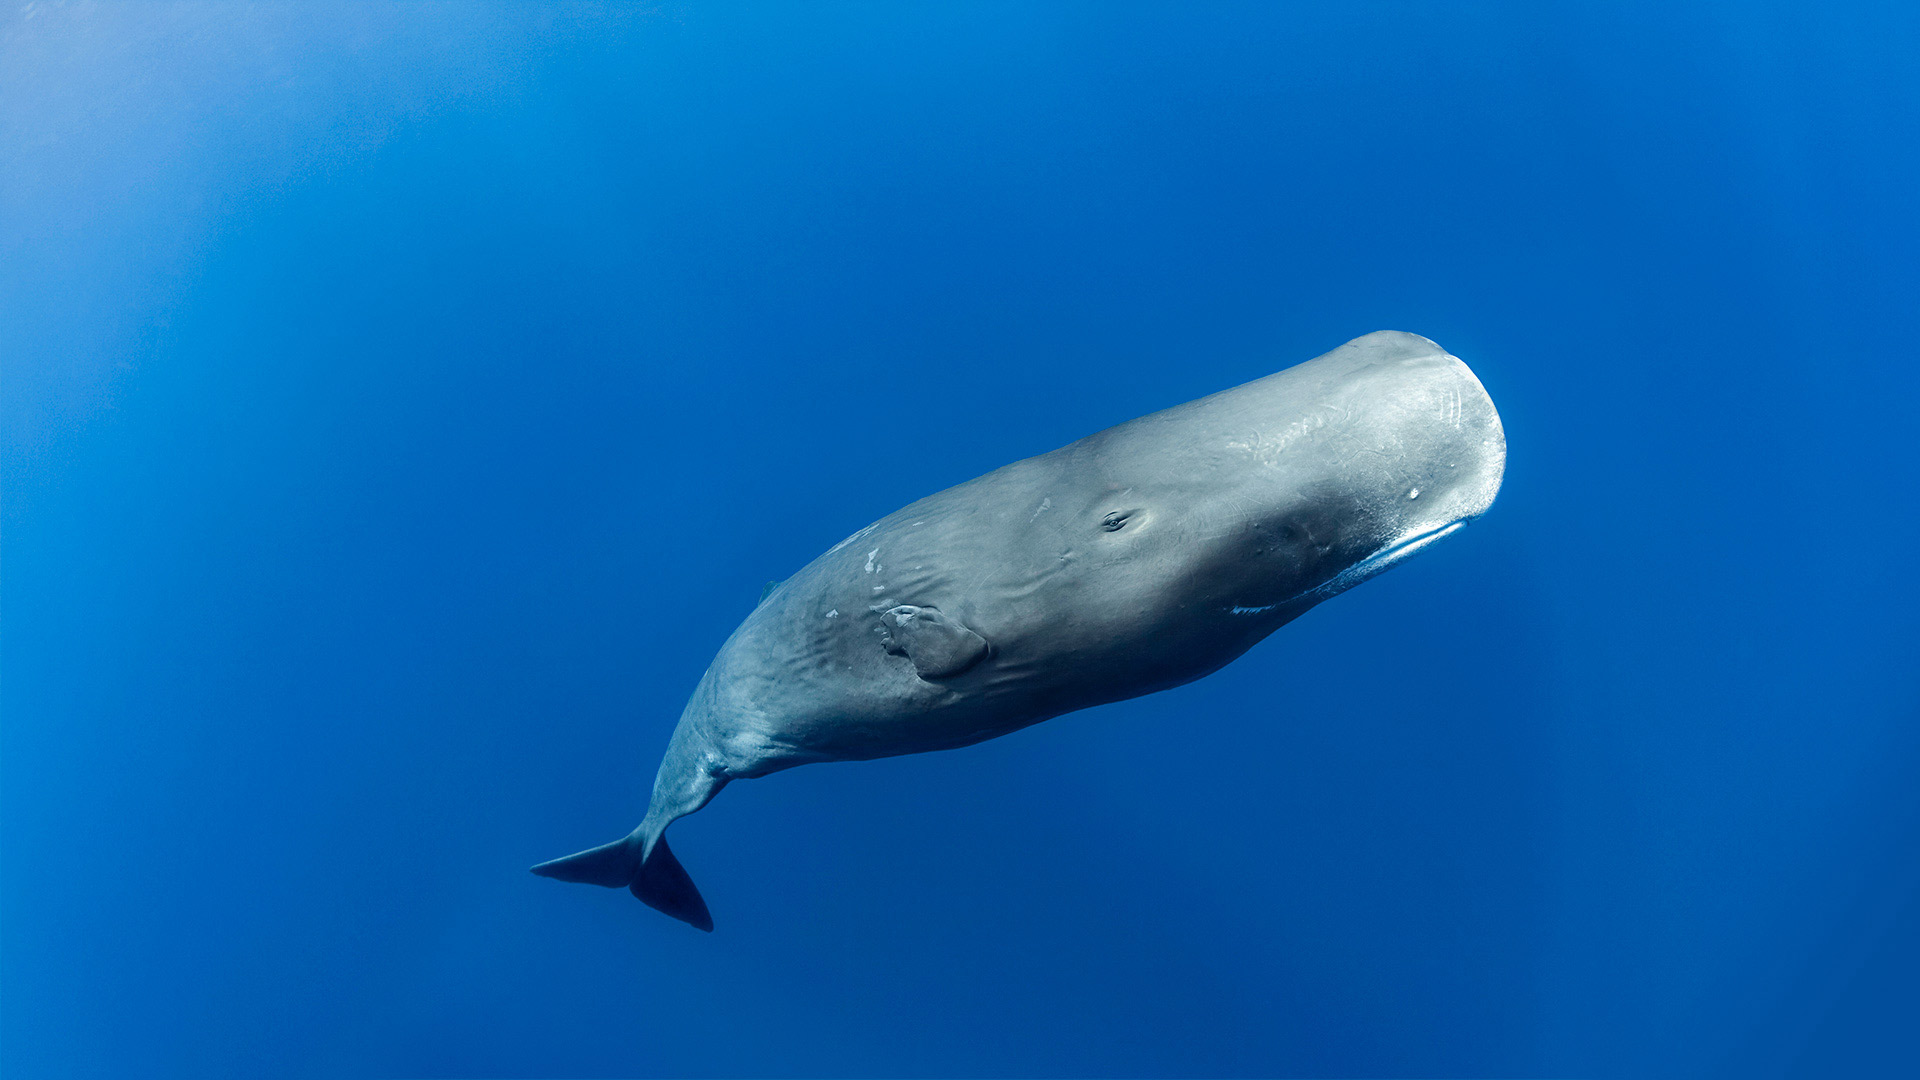 Sperm whale off the coast of Roseau, Dominica, in the Caribbean Sea - Tony Wu